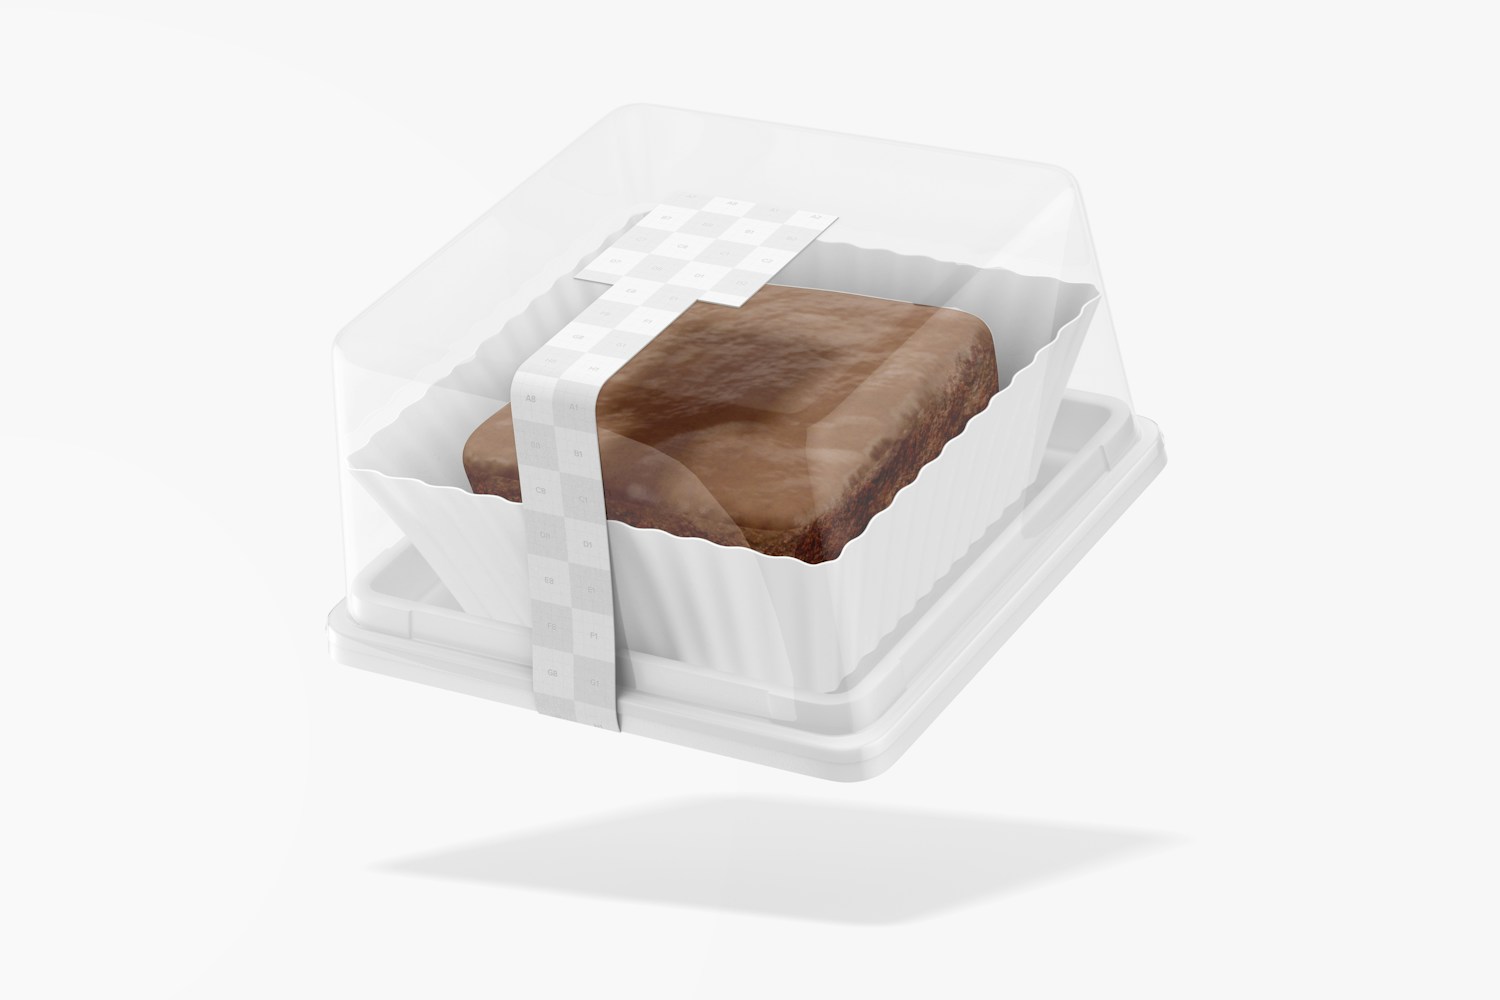 Square Dessert Box Mockup, Floating